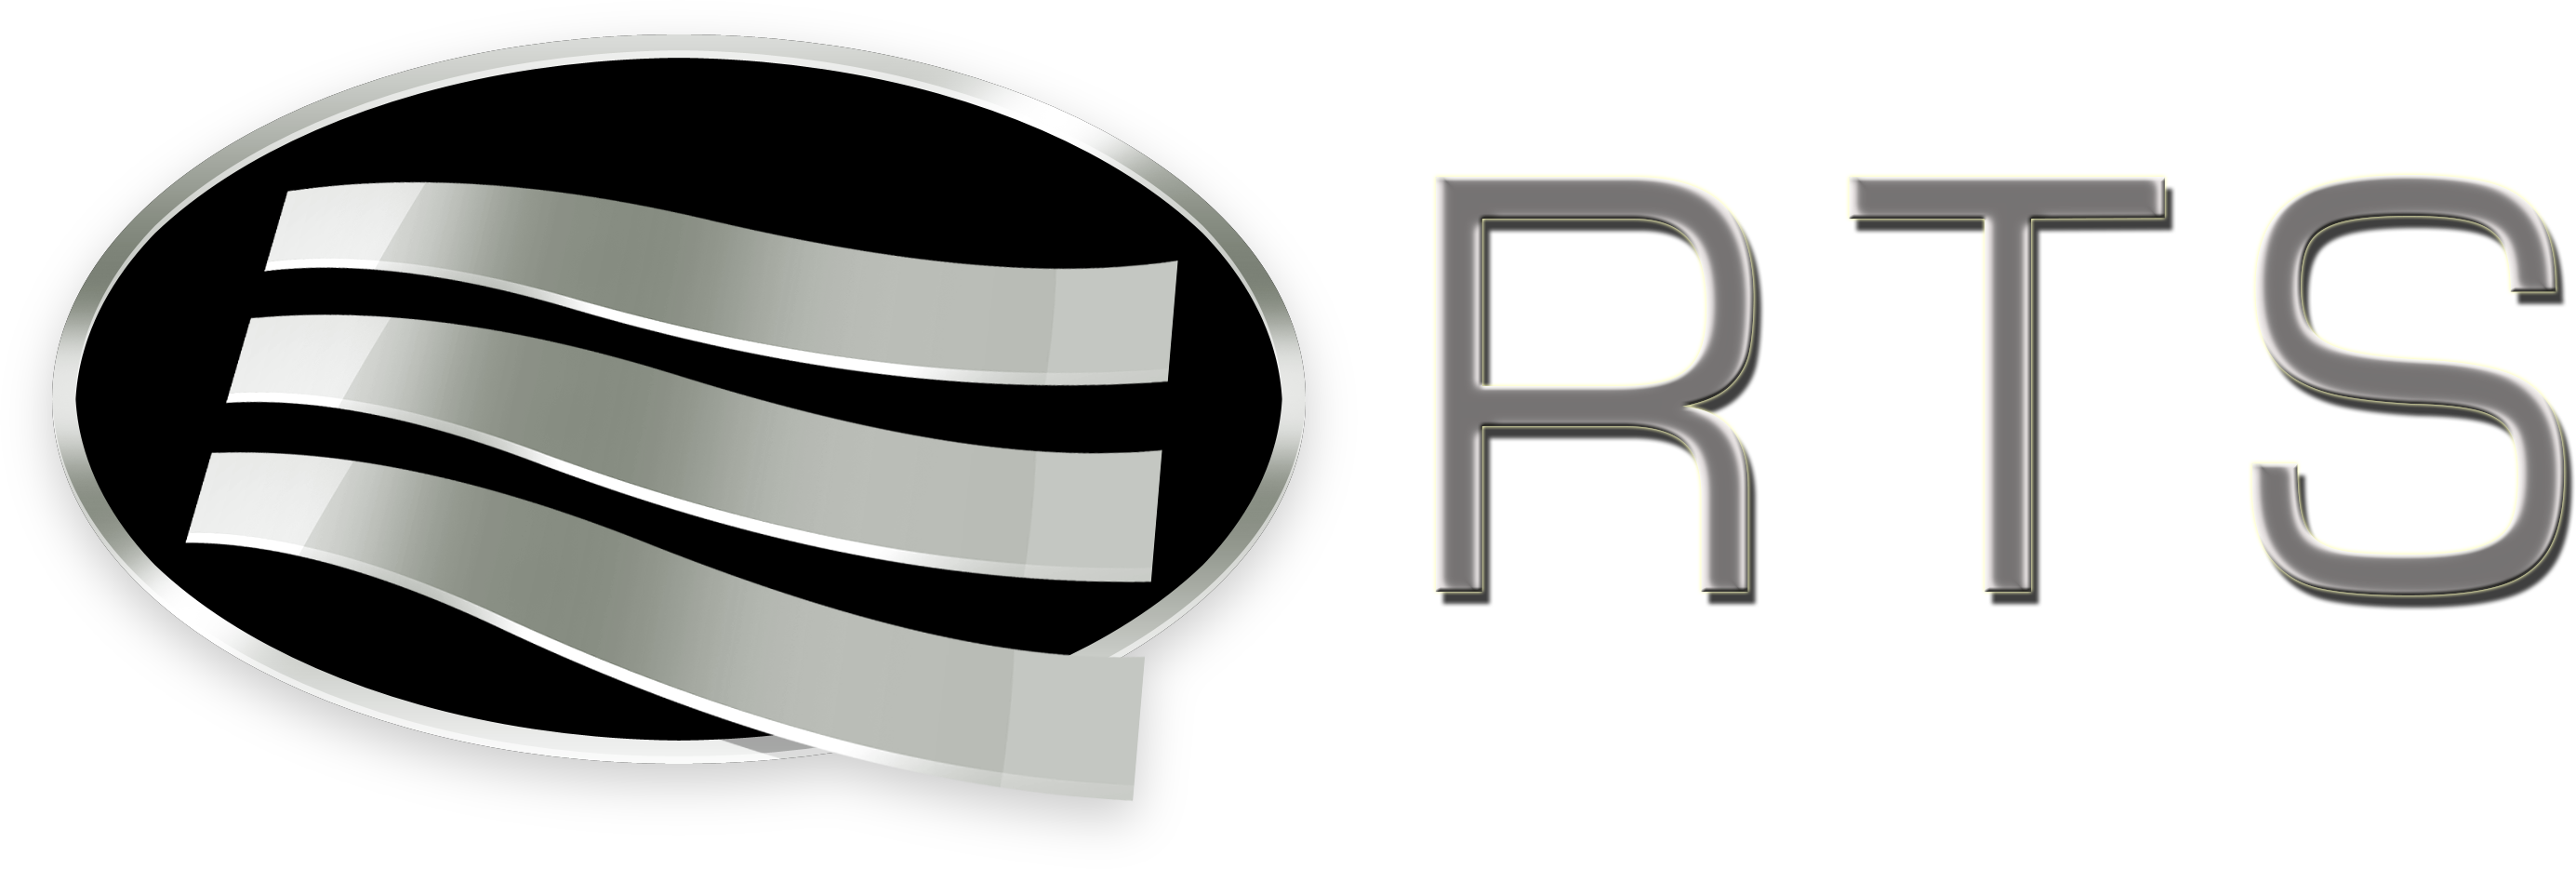 logo for Retail Technology Services Ltd